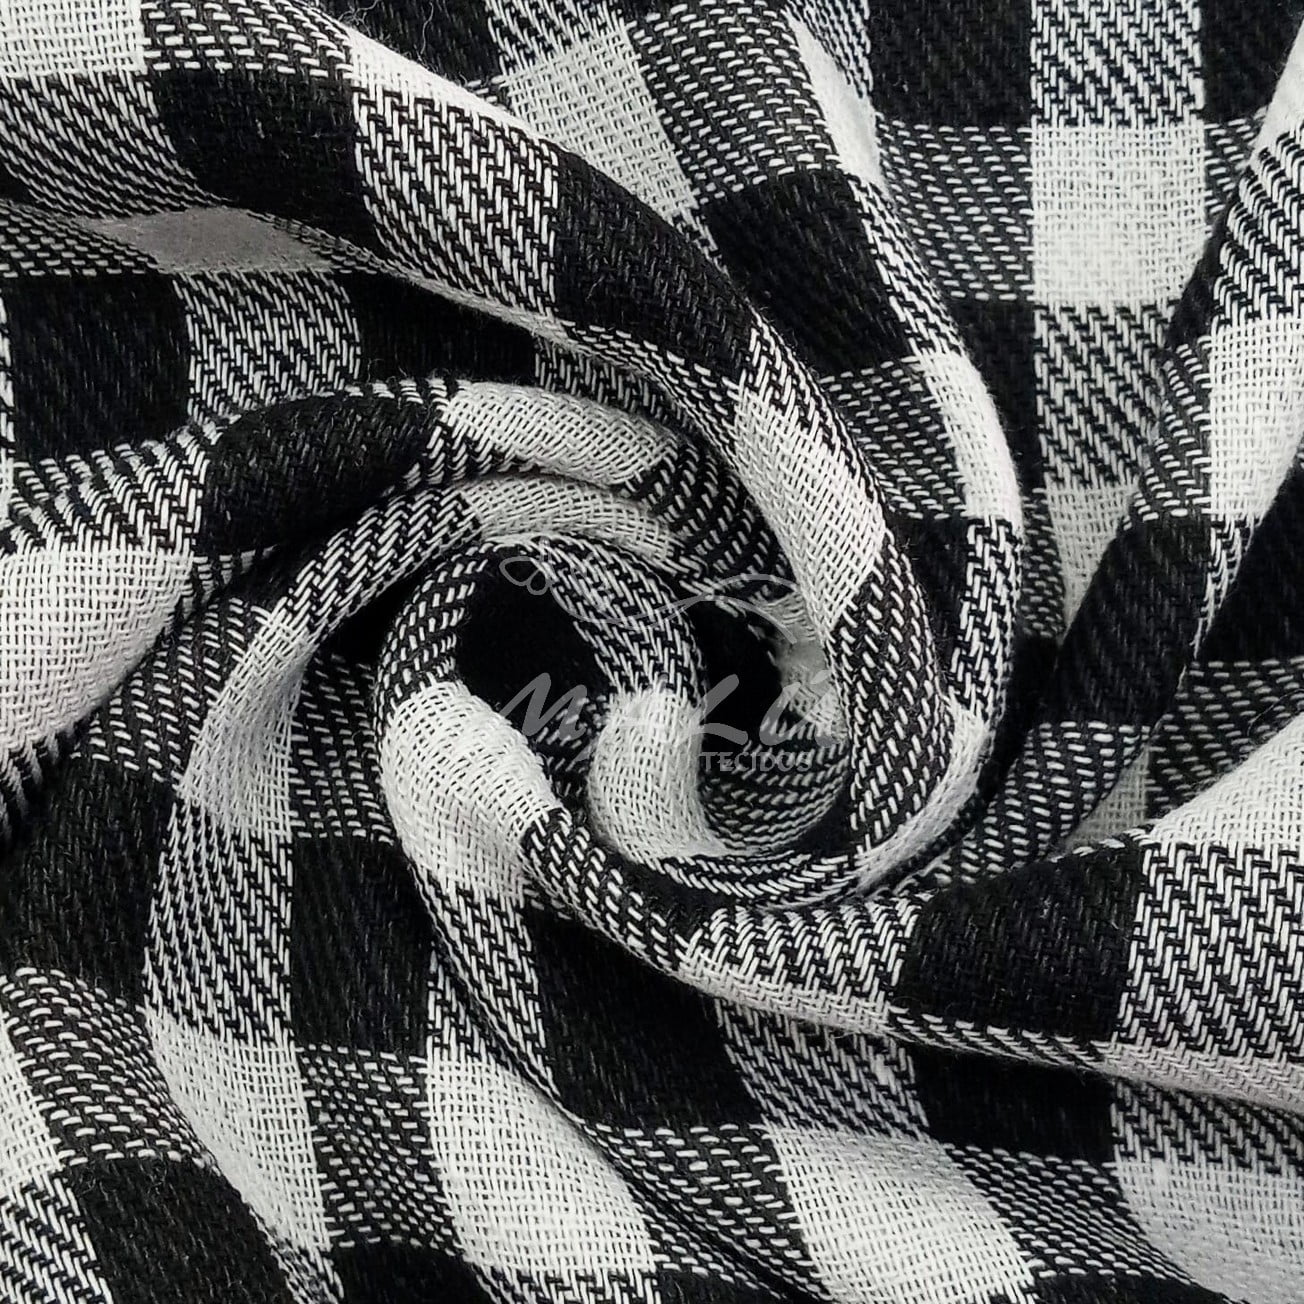 Tecido flanelado xadrez preto/cinza